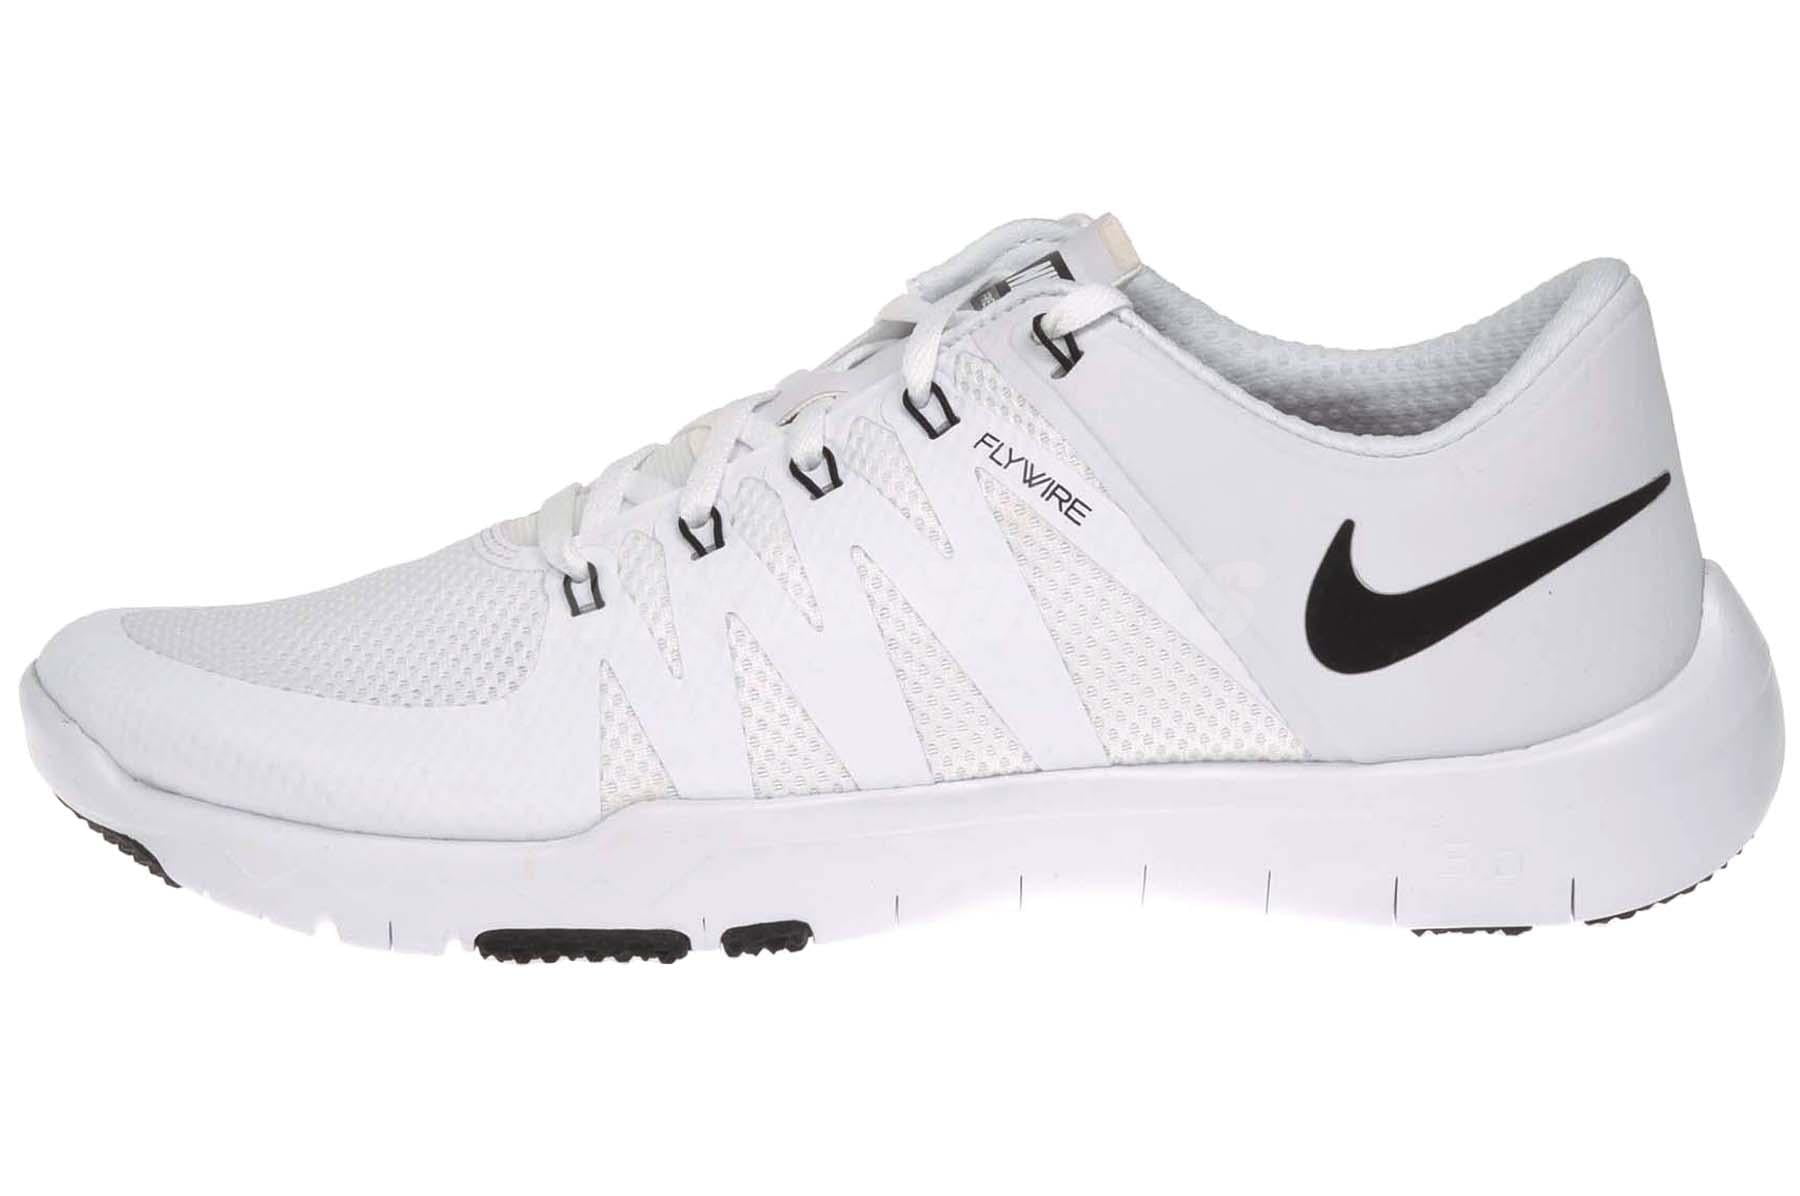 Nike Trainer 5.0 Men's Shoes -